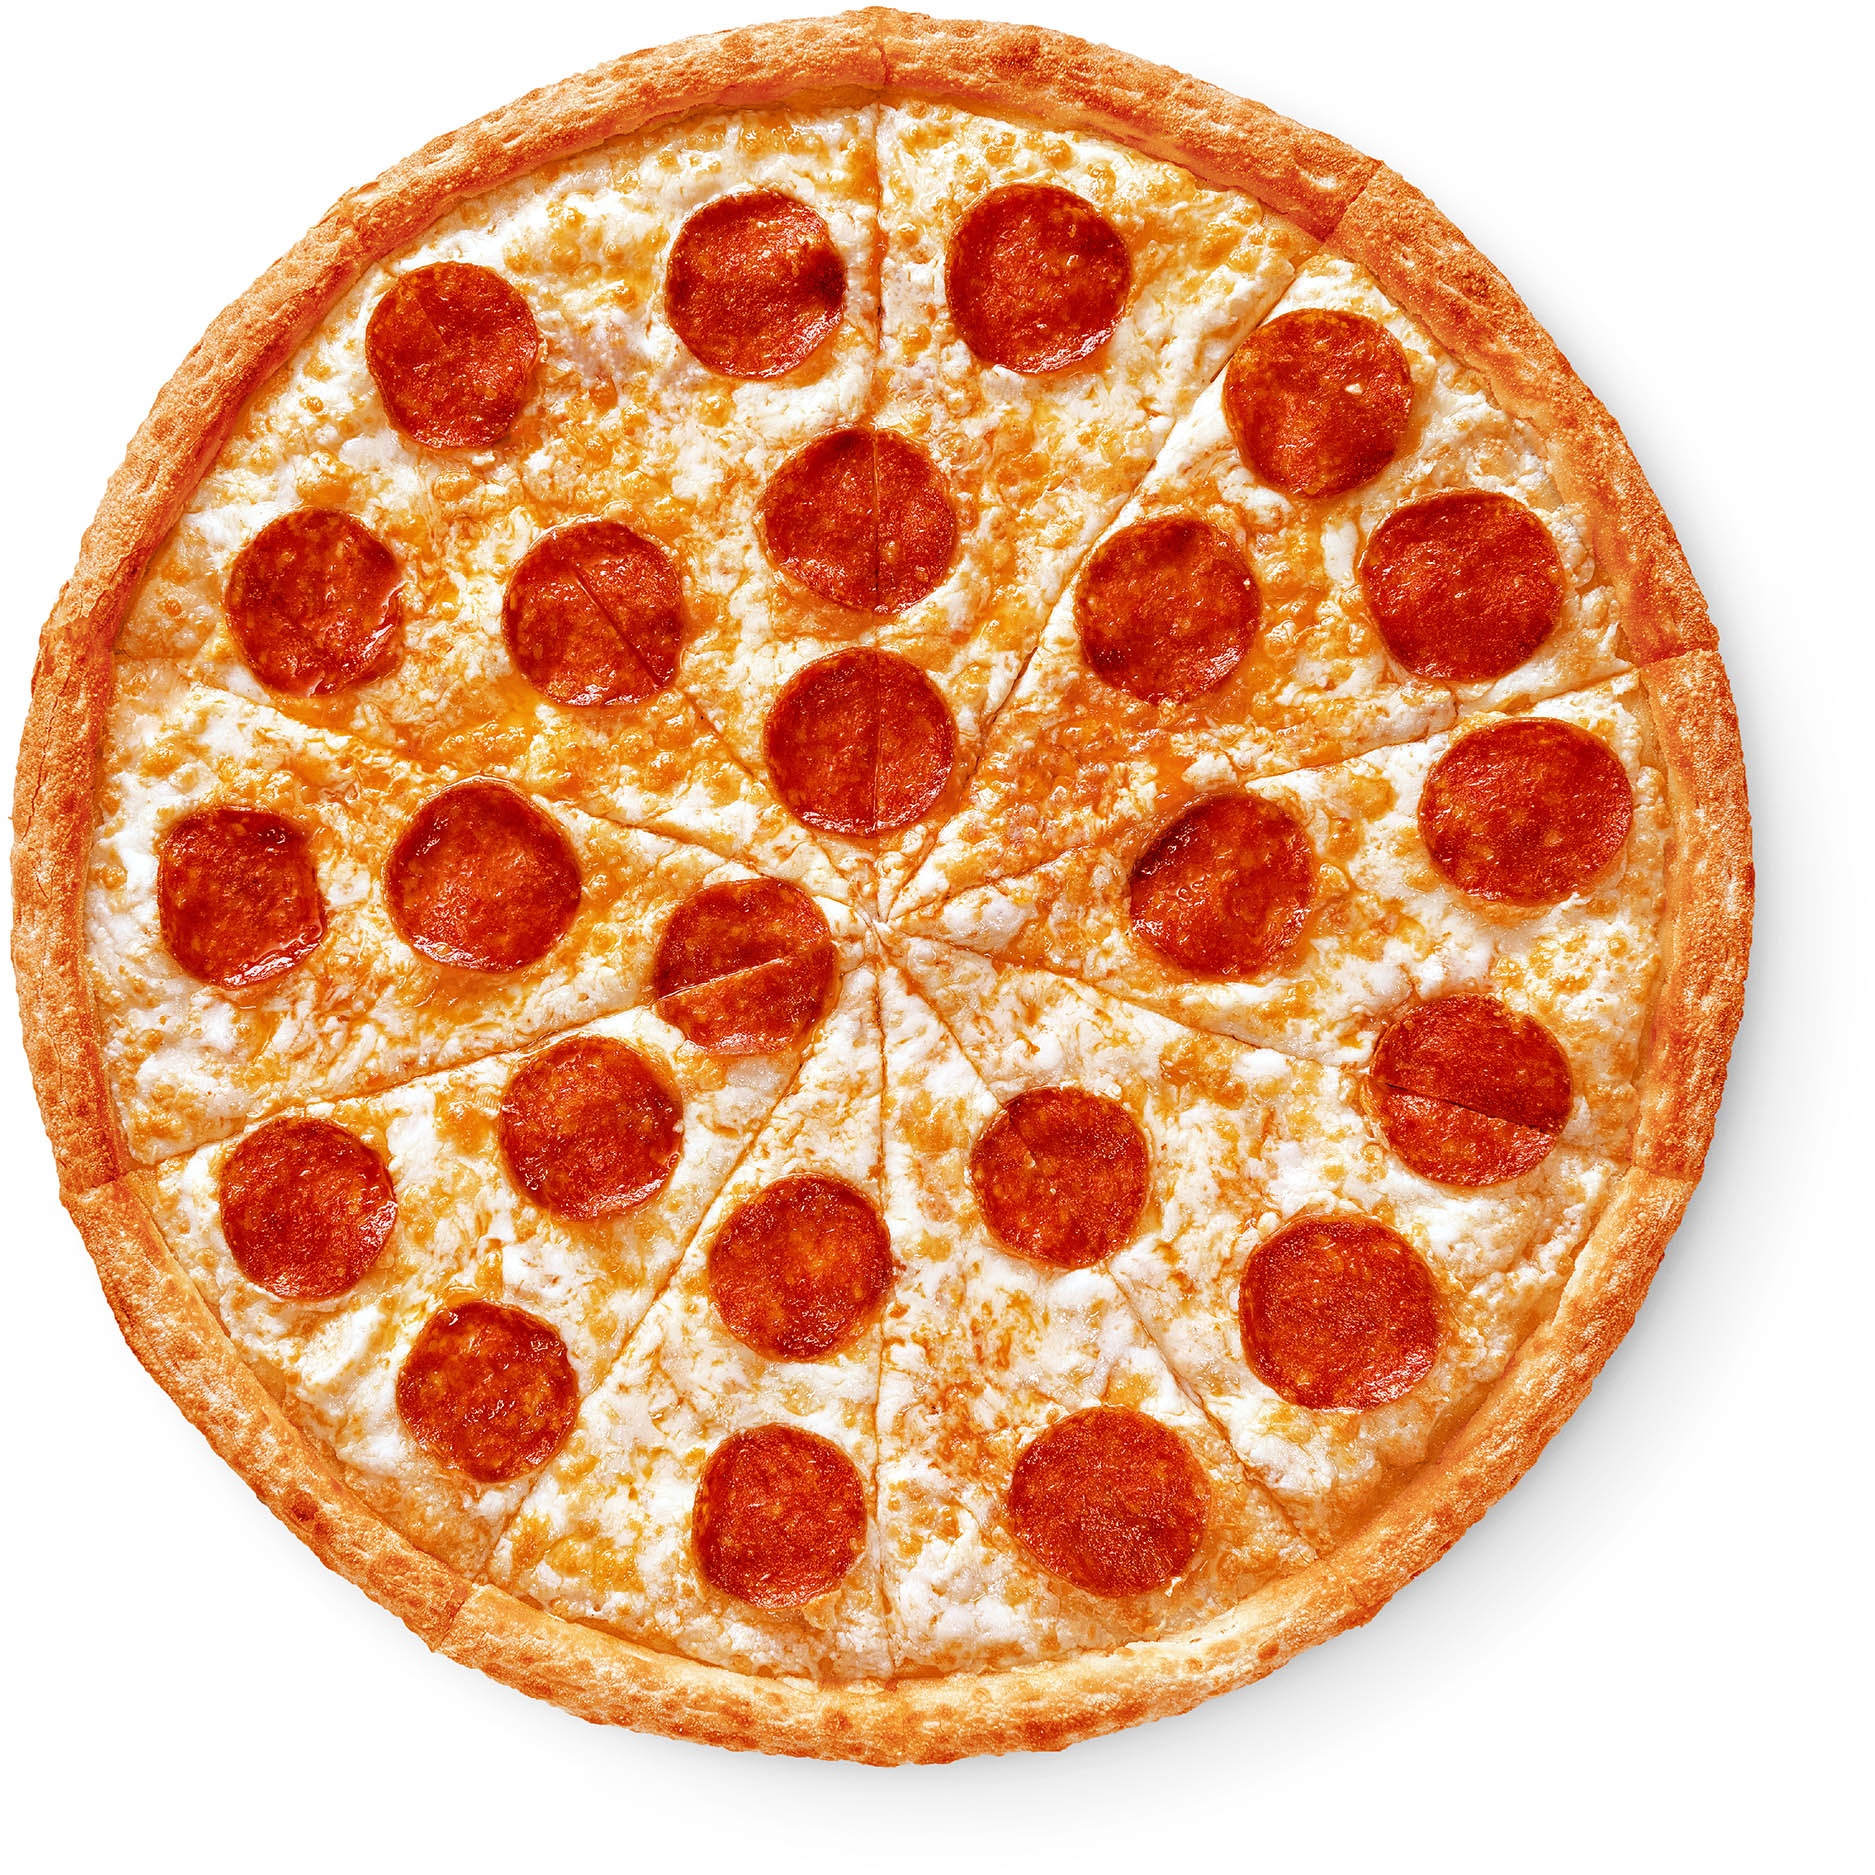 классика пицца состав фото 78